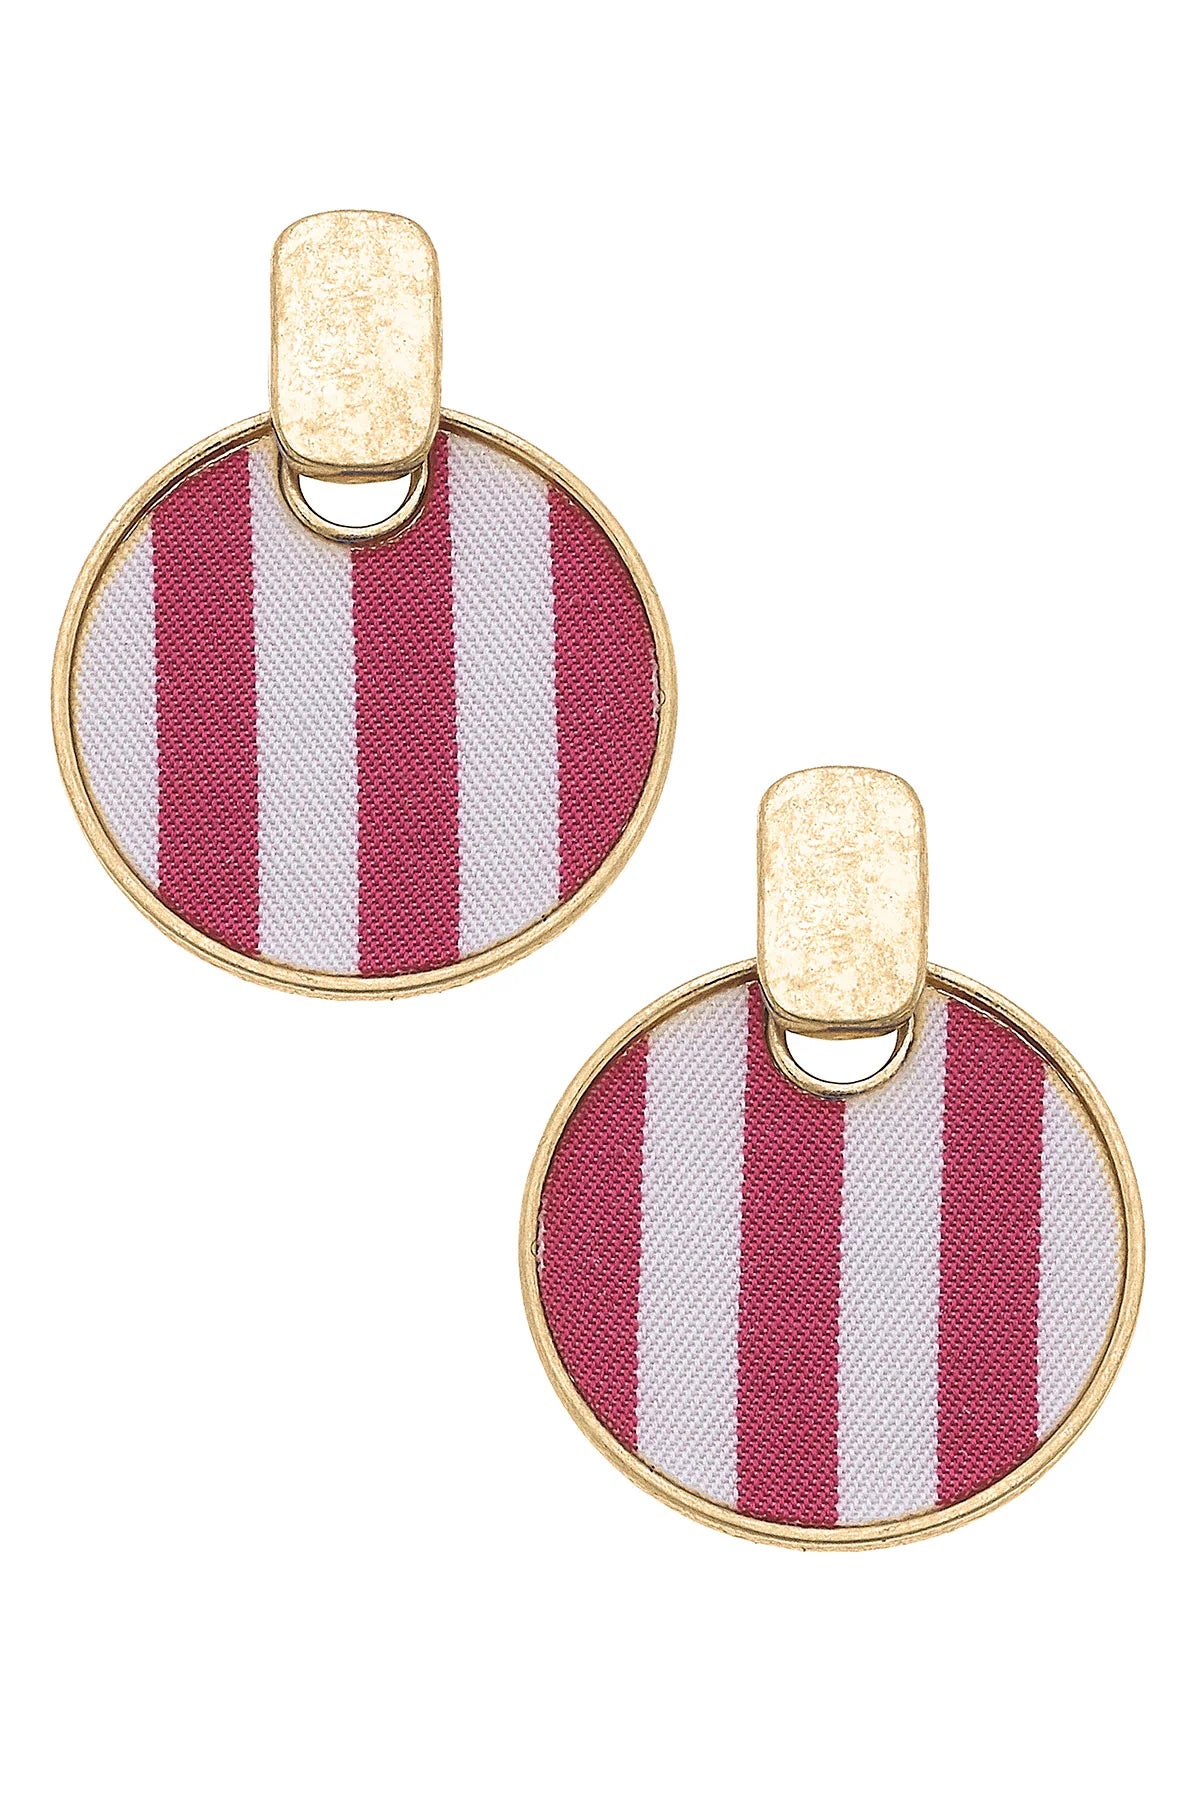 Cabana Stripes Disc Earrings in Fuchsia - Findlay Rowe Designs